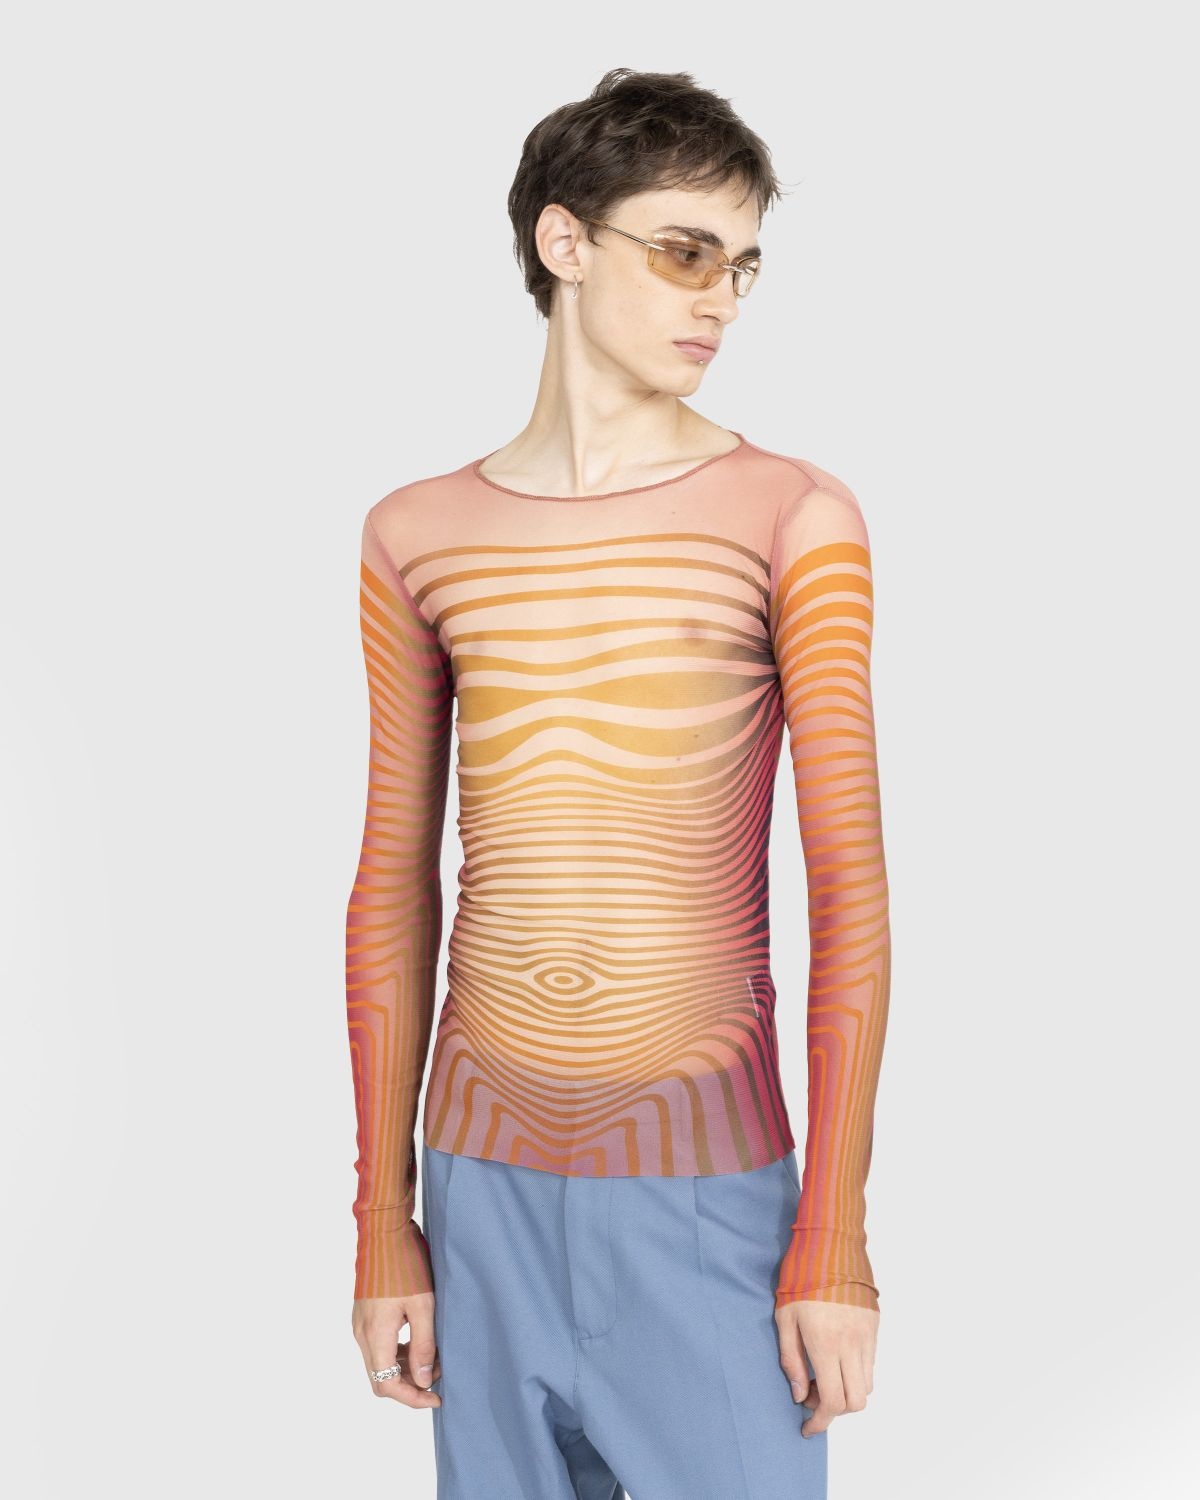 Jean Paul Gaultier – Crewneck Long Sleeves Printed Morphing Stripes Red - 2